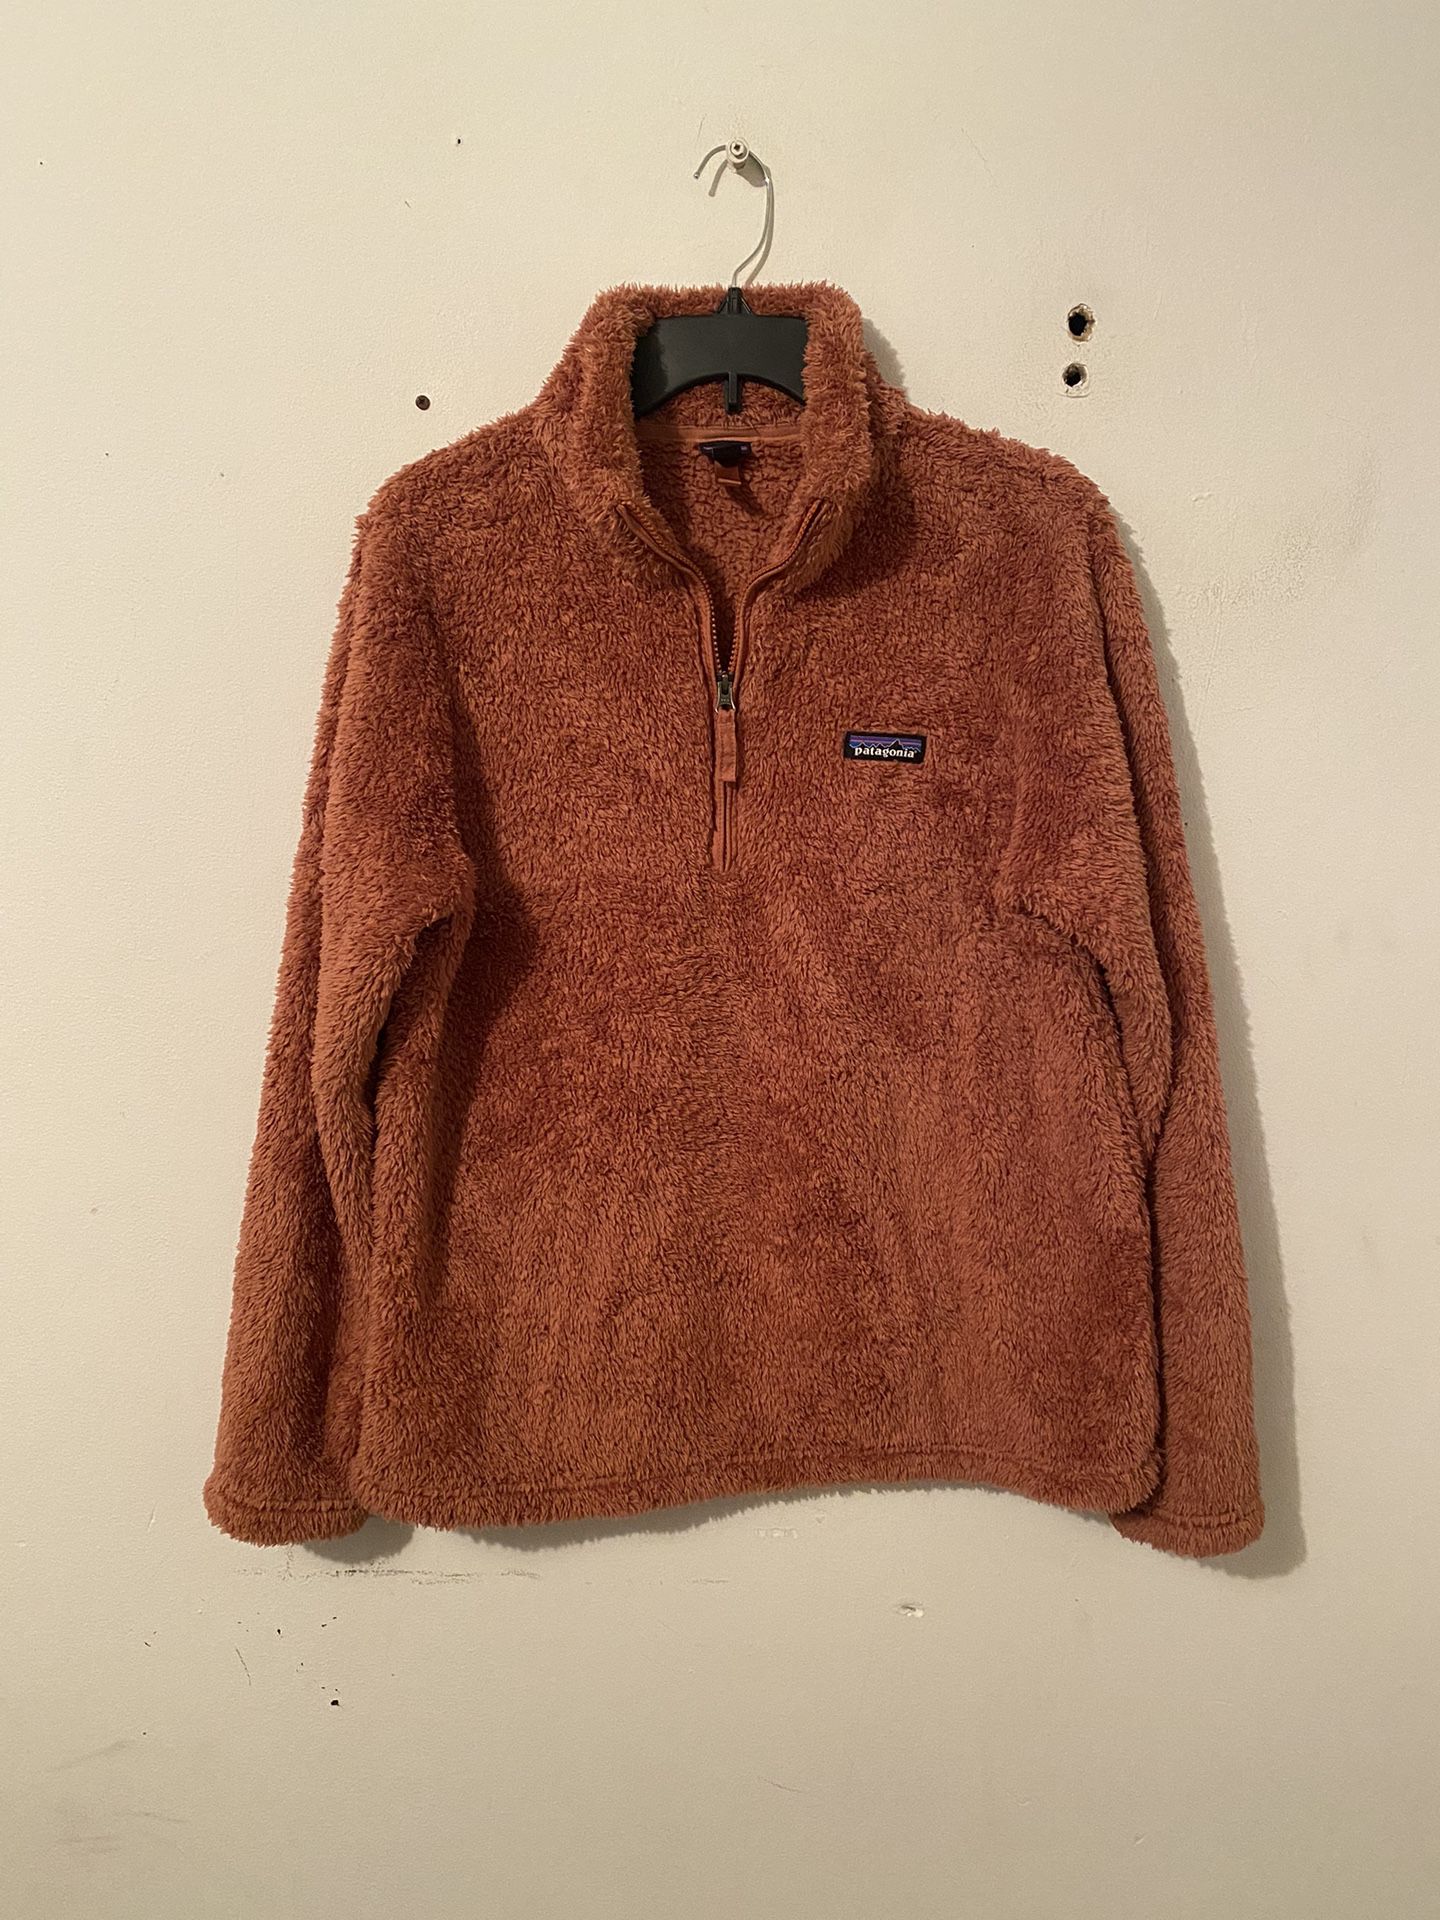 Patagonia Fleece Sweater Women's Size Large (Used)